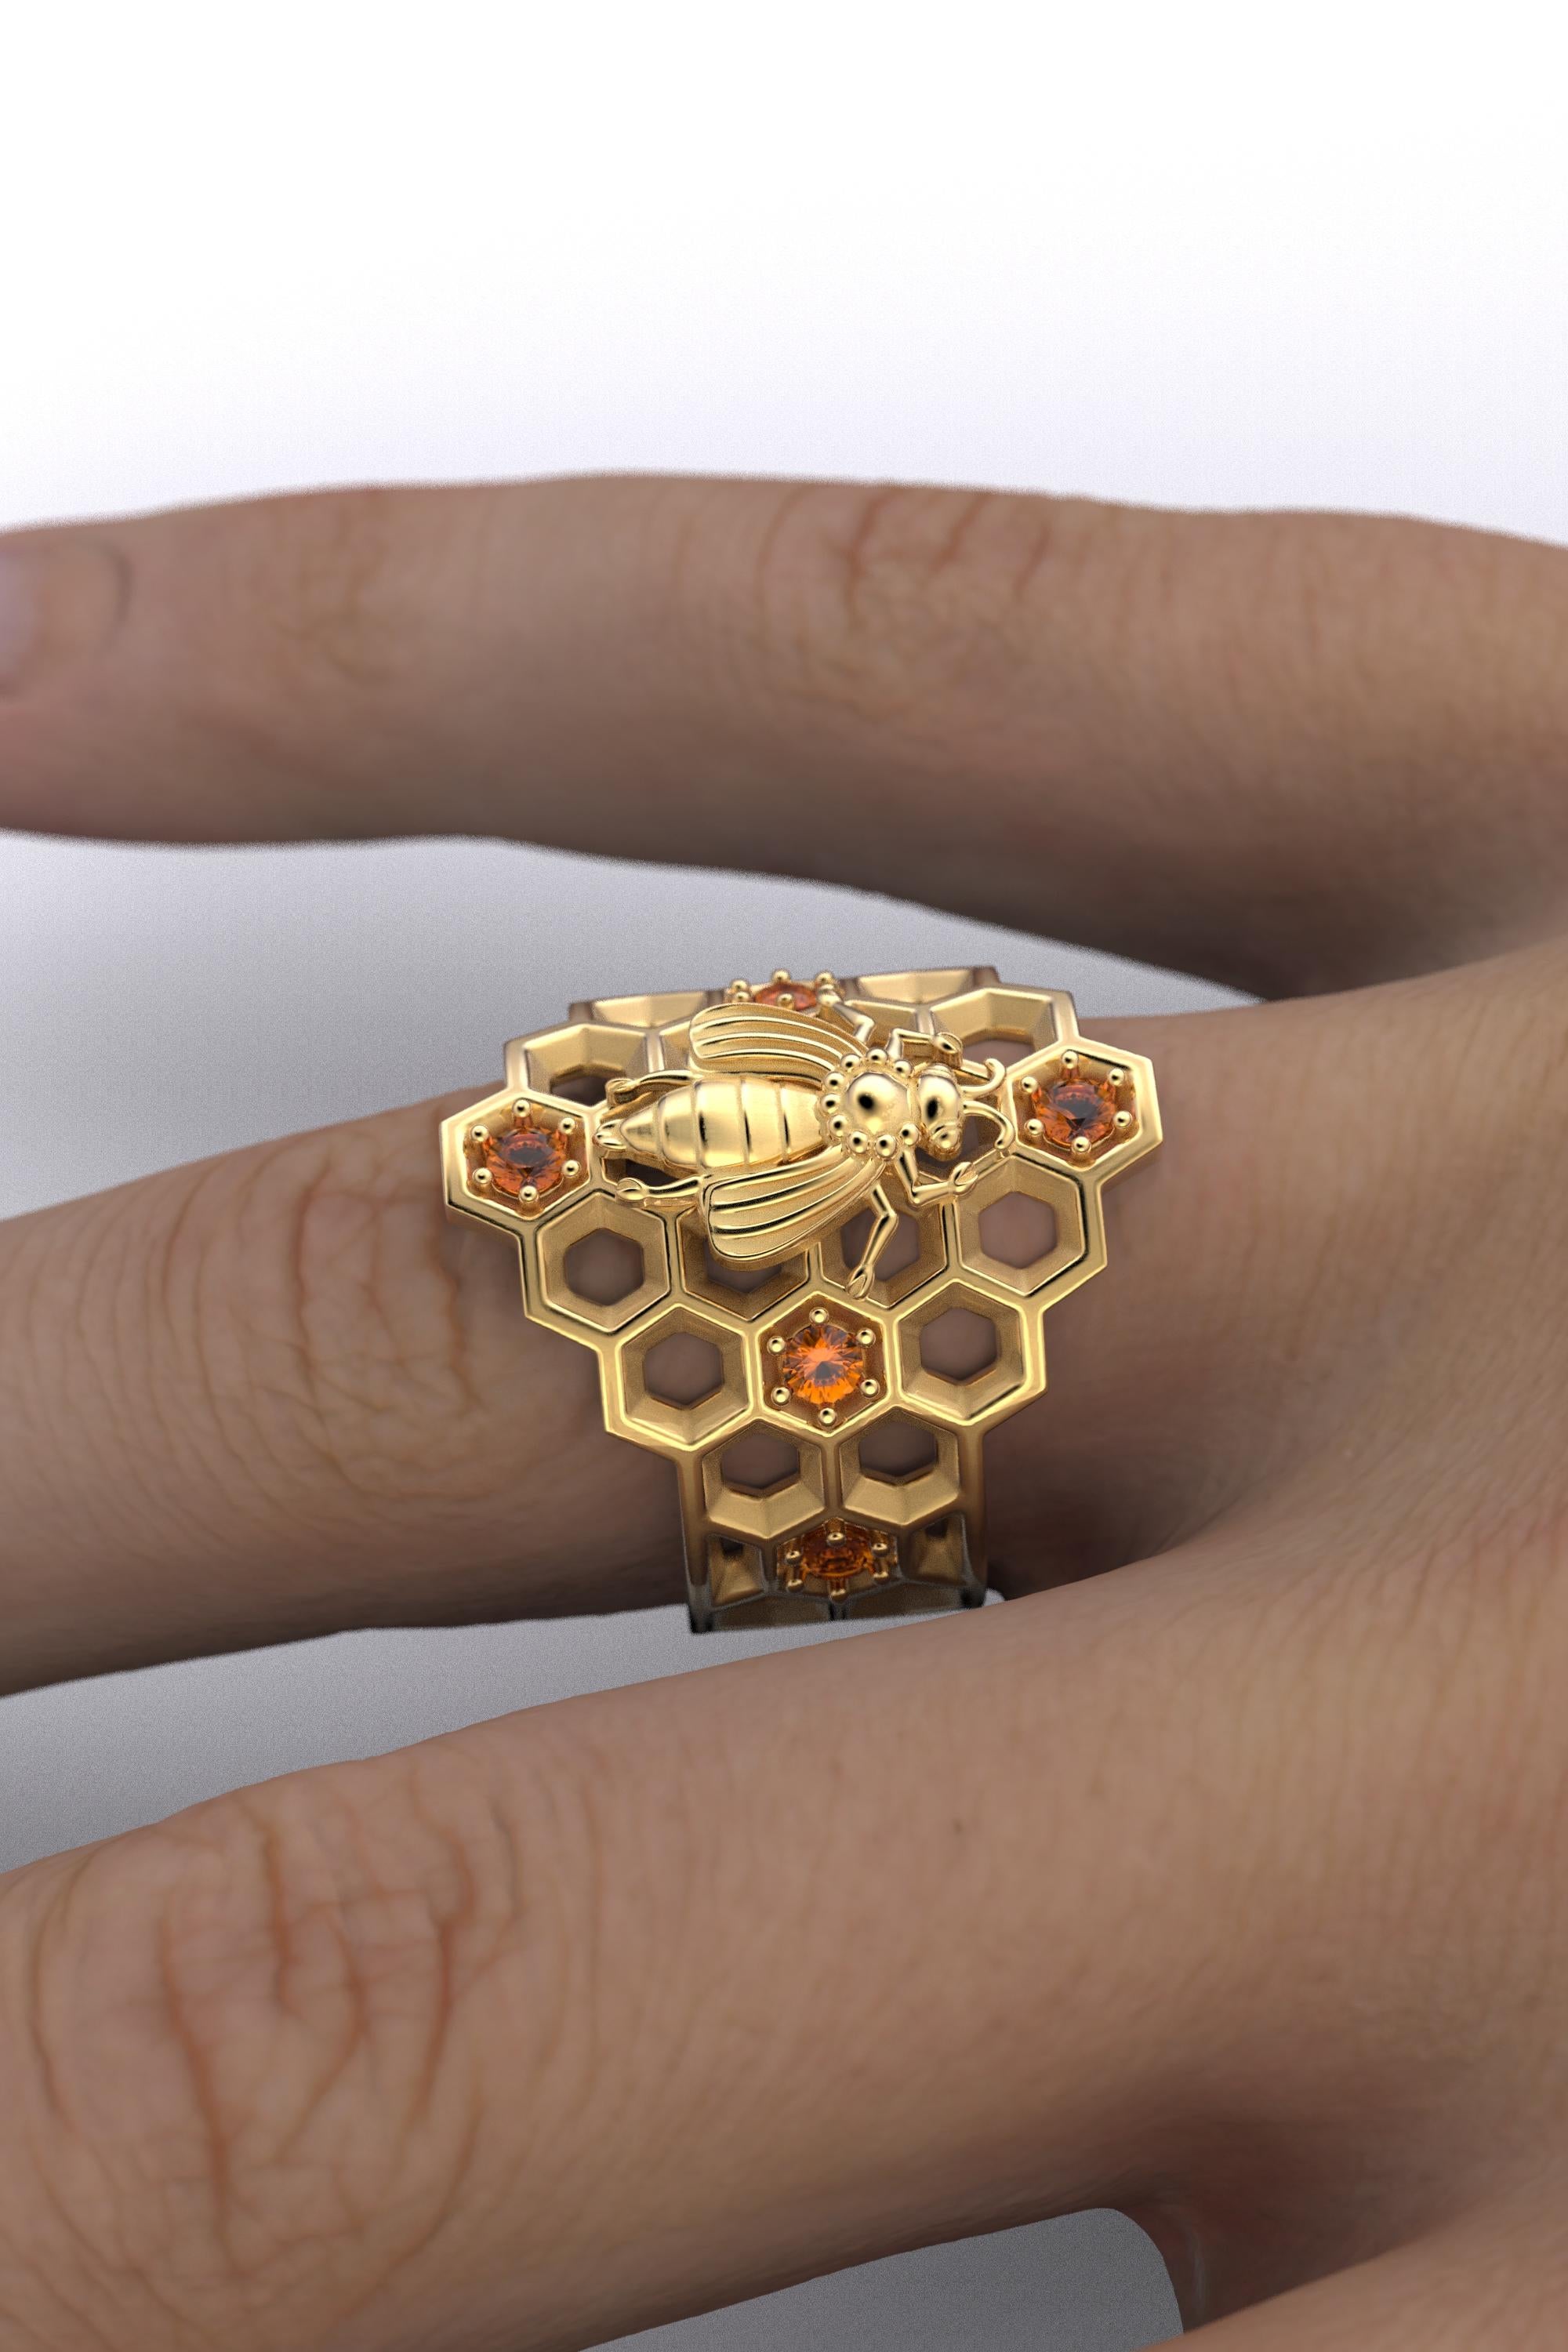 For Sale:   Honeycomb Bee Ring in 14k Solid Gold with natural Orange Spessartite Garnet 4